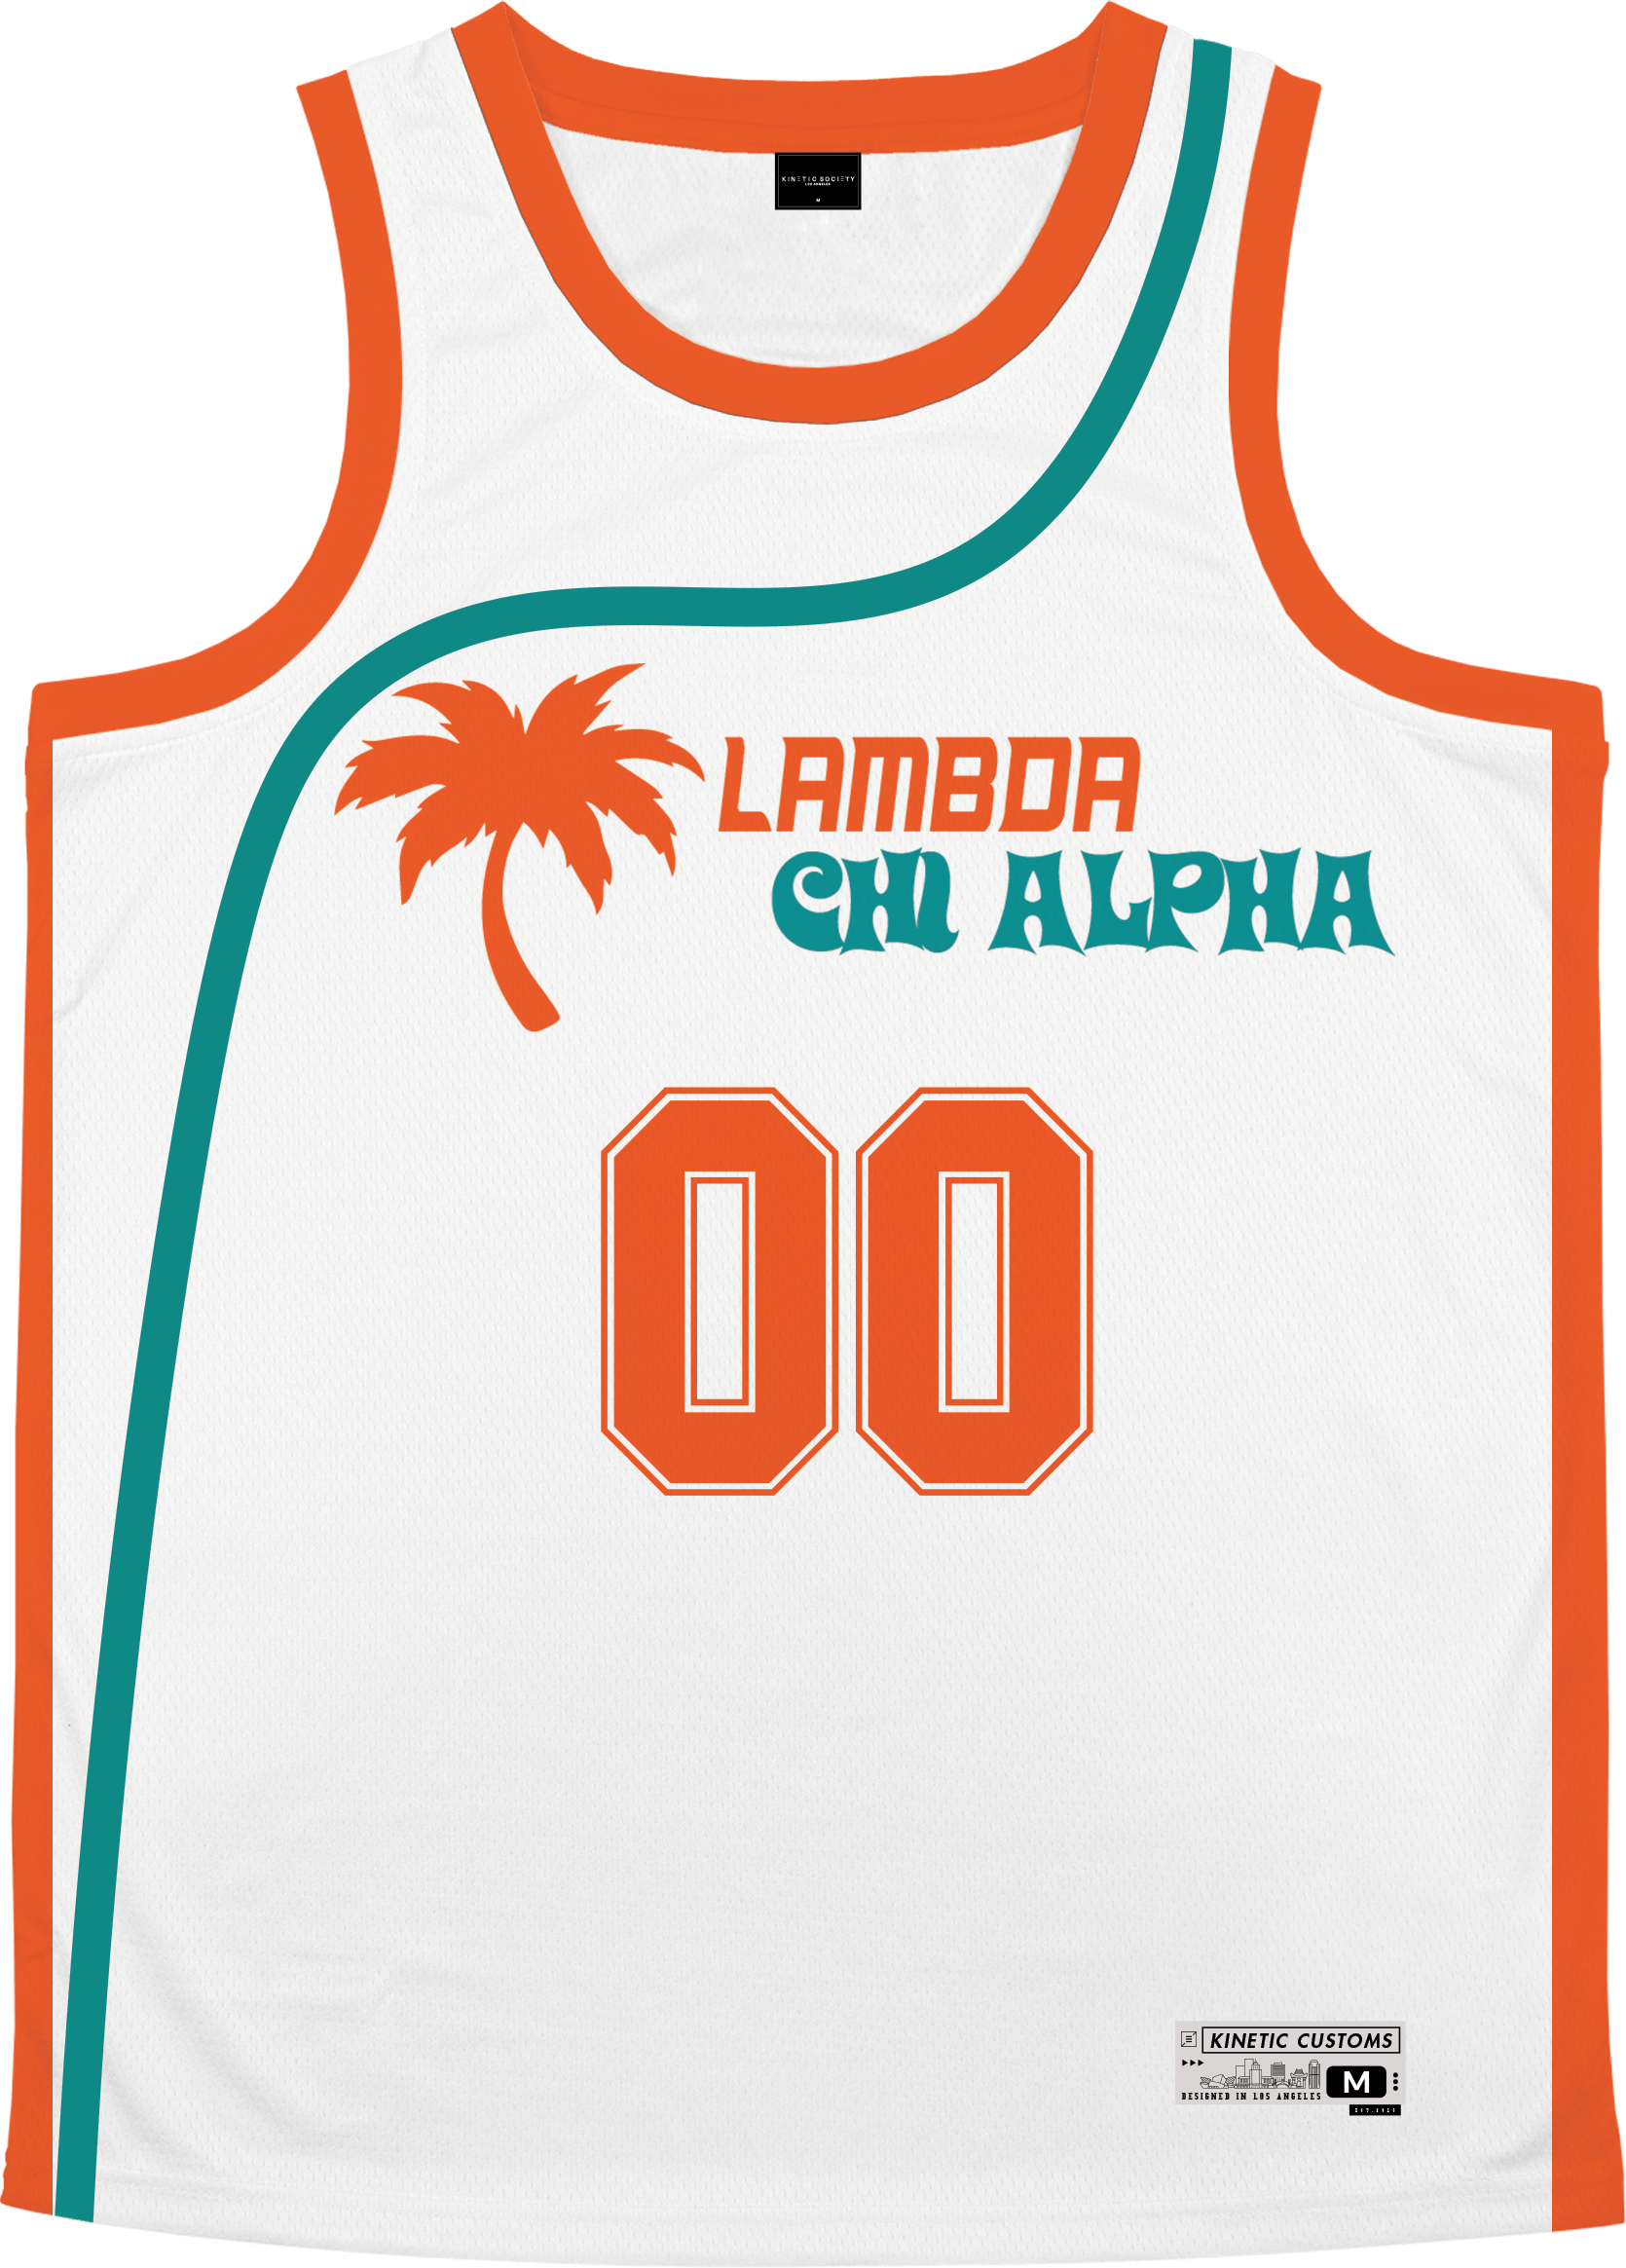 Lambda Chi Alpha - Tropical Basketball Jersey Premium Basketball Kinetic Society LLC 